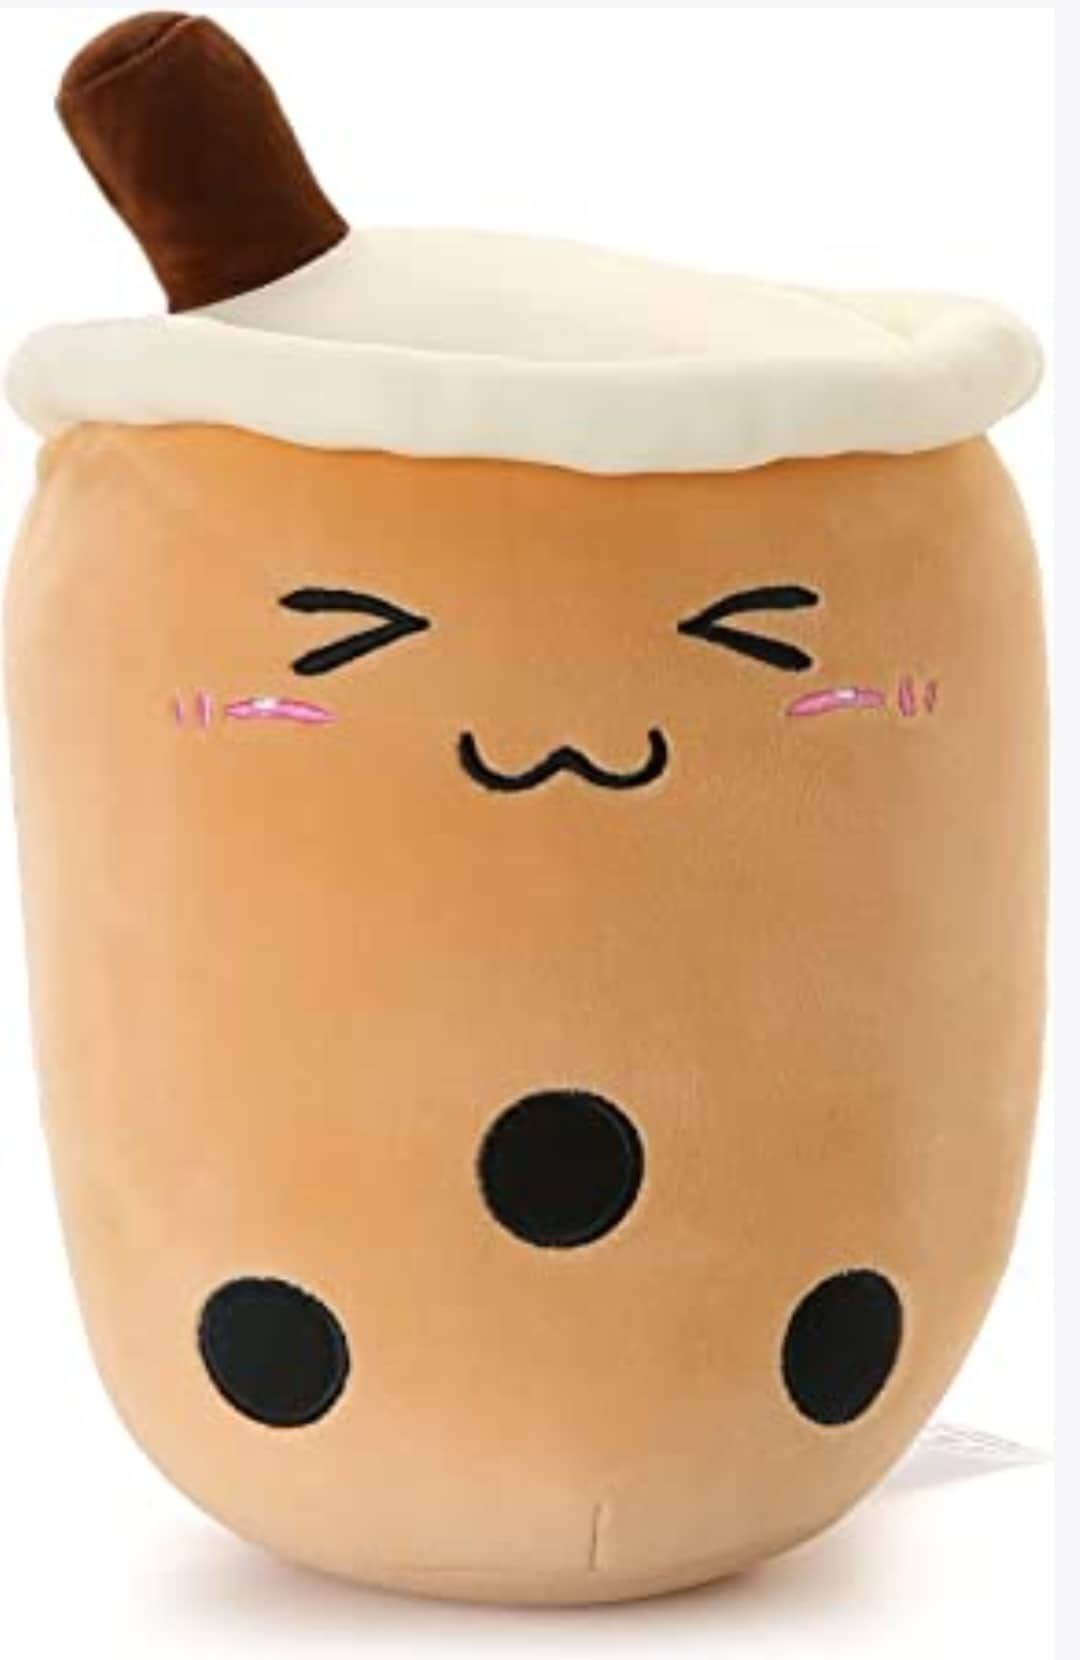 Cute Bubble Tea Boba Plush Soft Toy